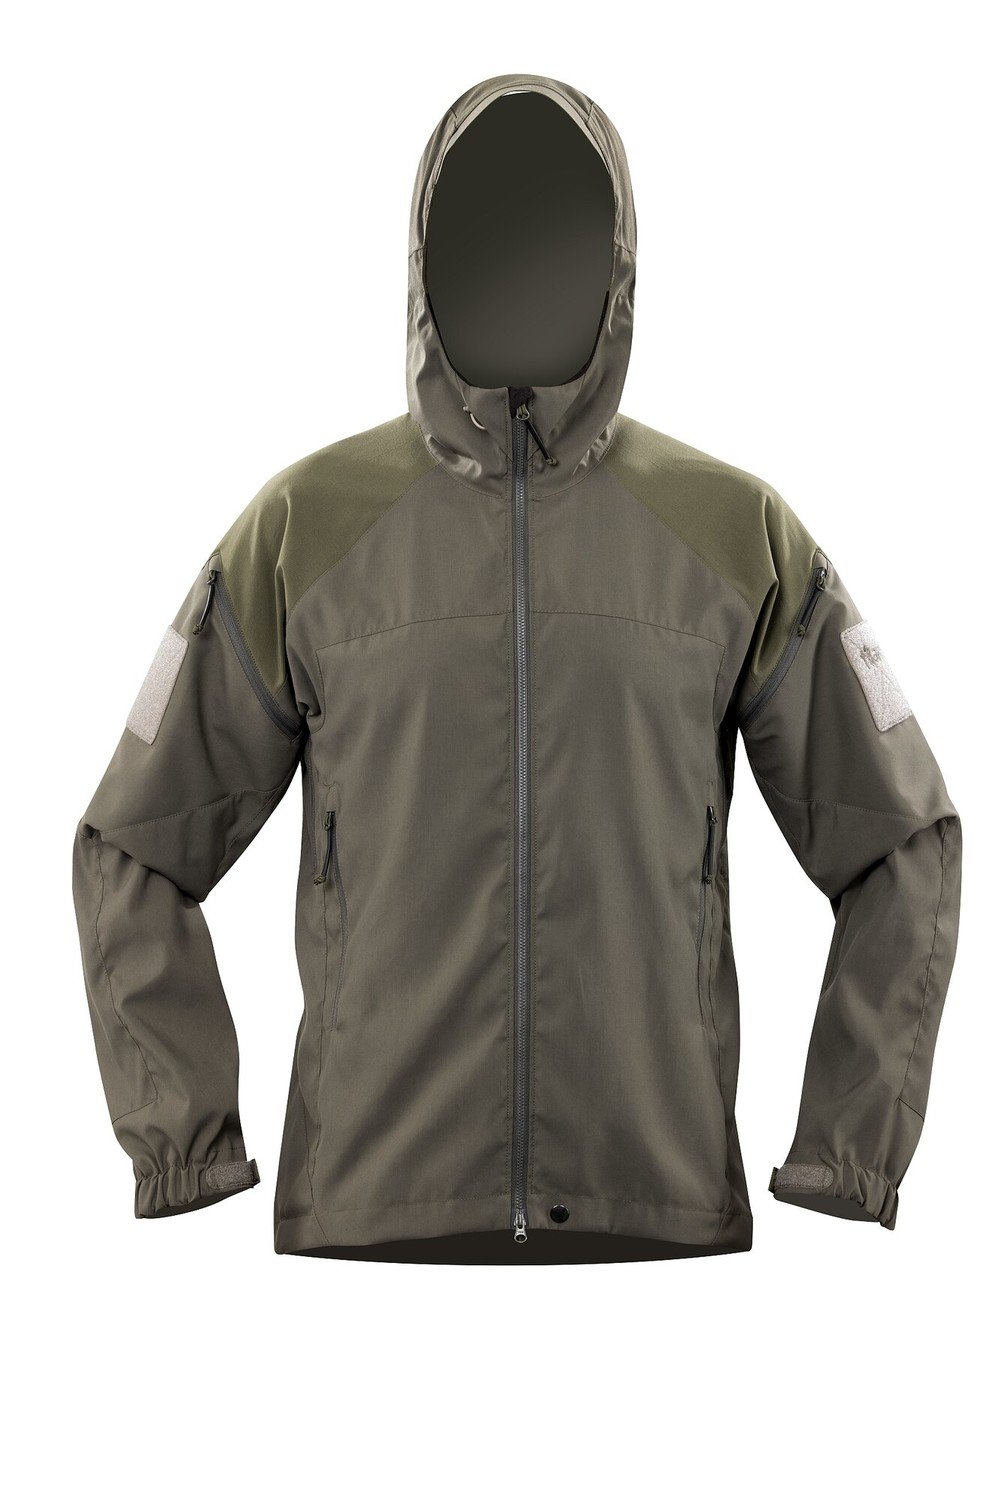 Bunda Operator Tilak Military Gear® – Khaki (Barva: Khaki, Velikost: M)